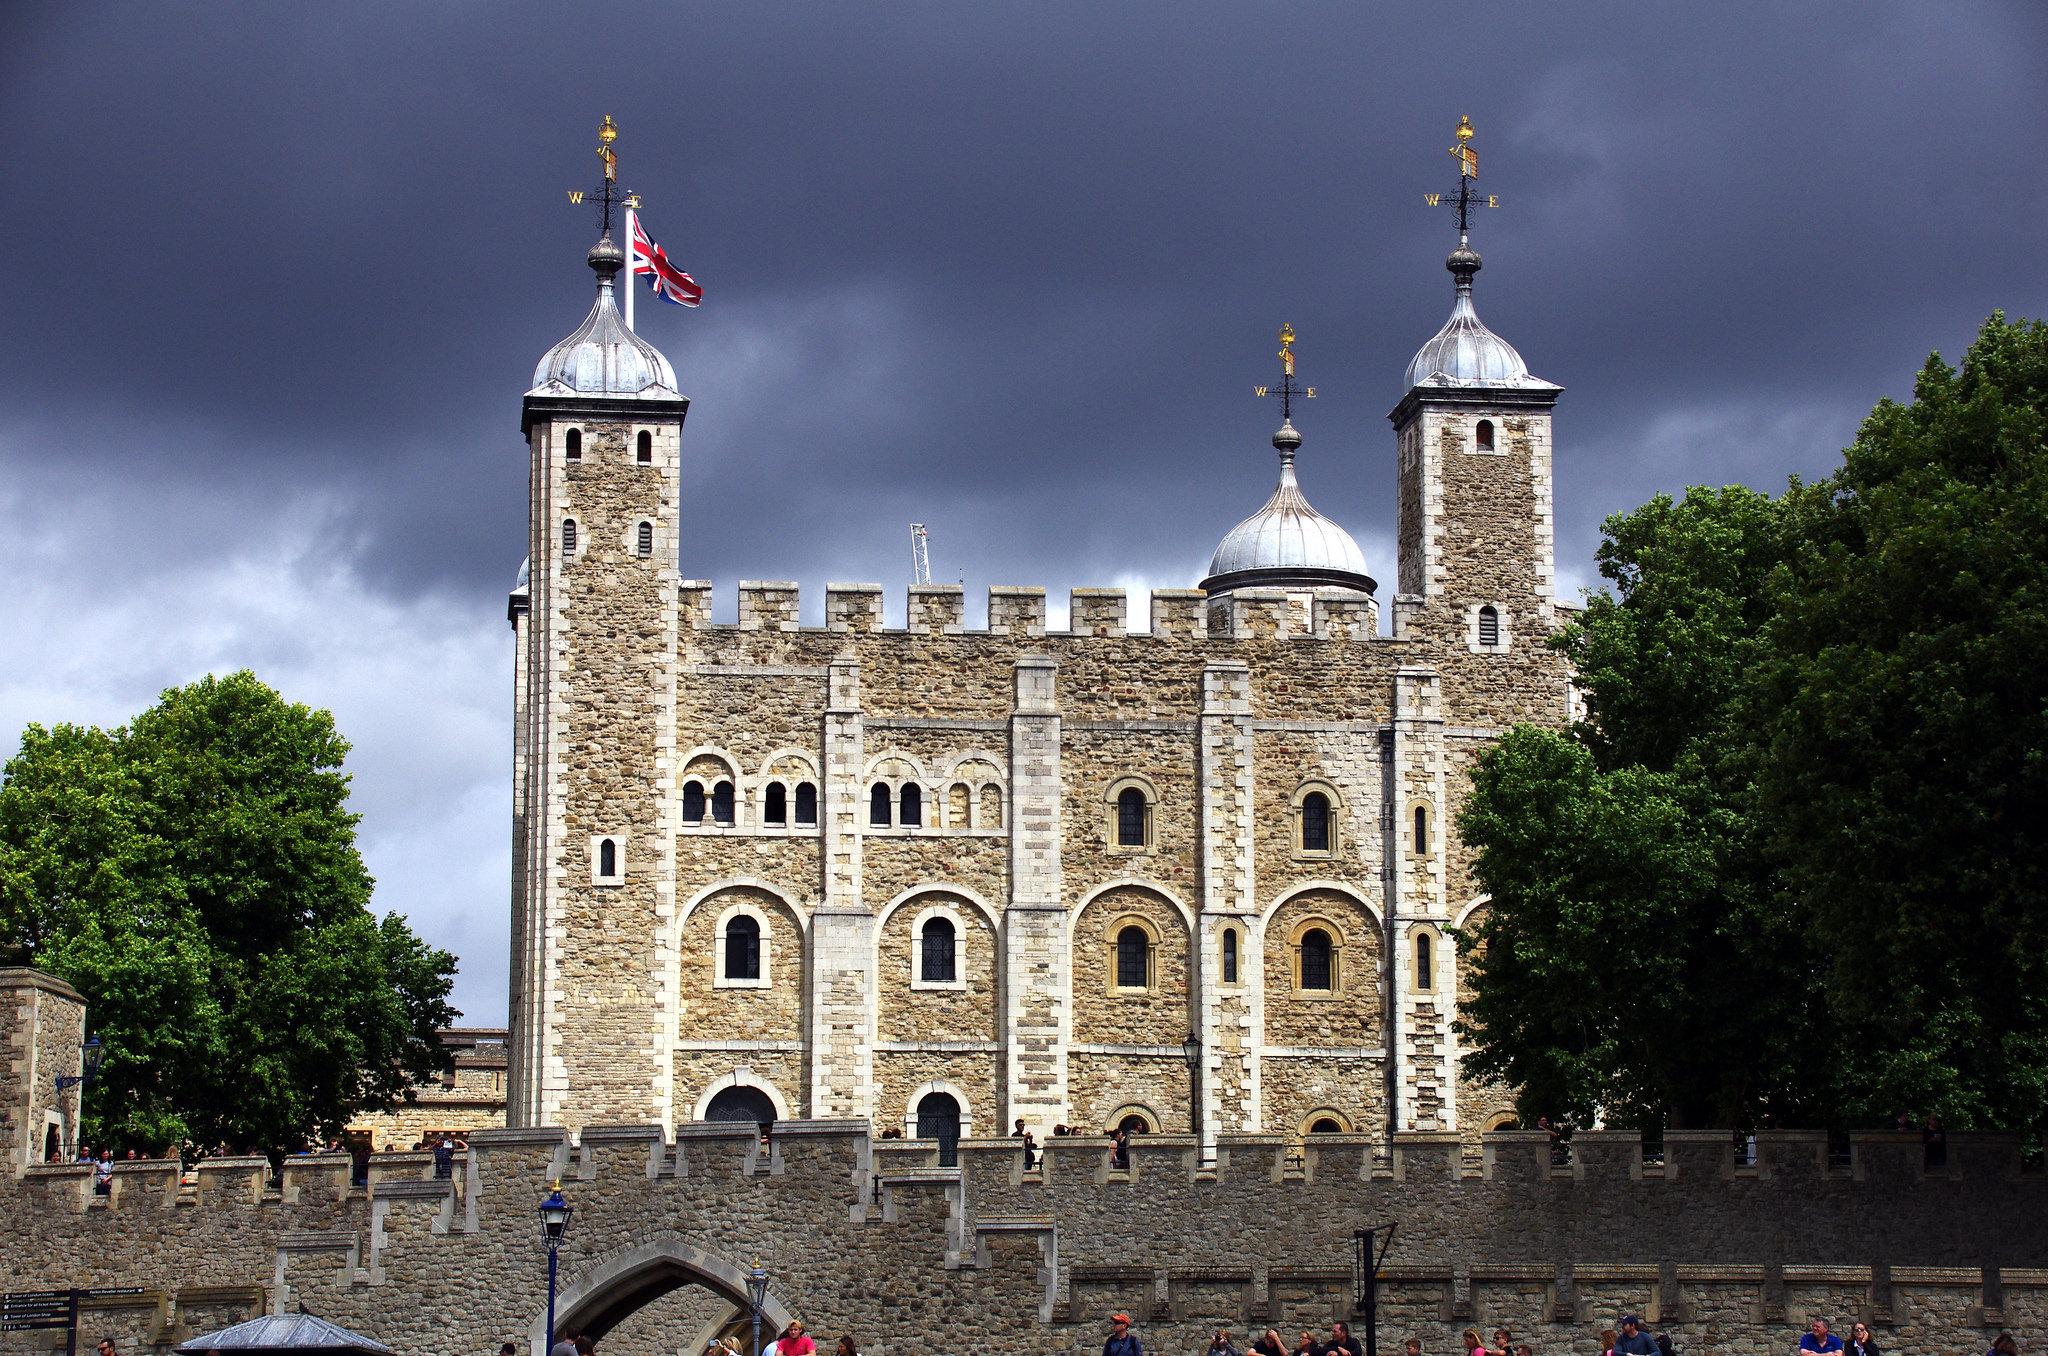 Discovering London's Iconic Landmarks